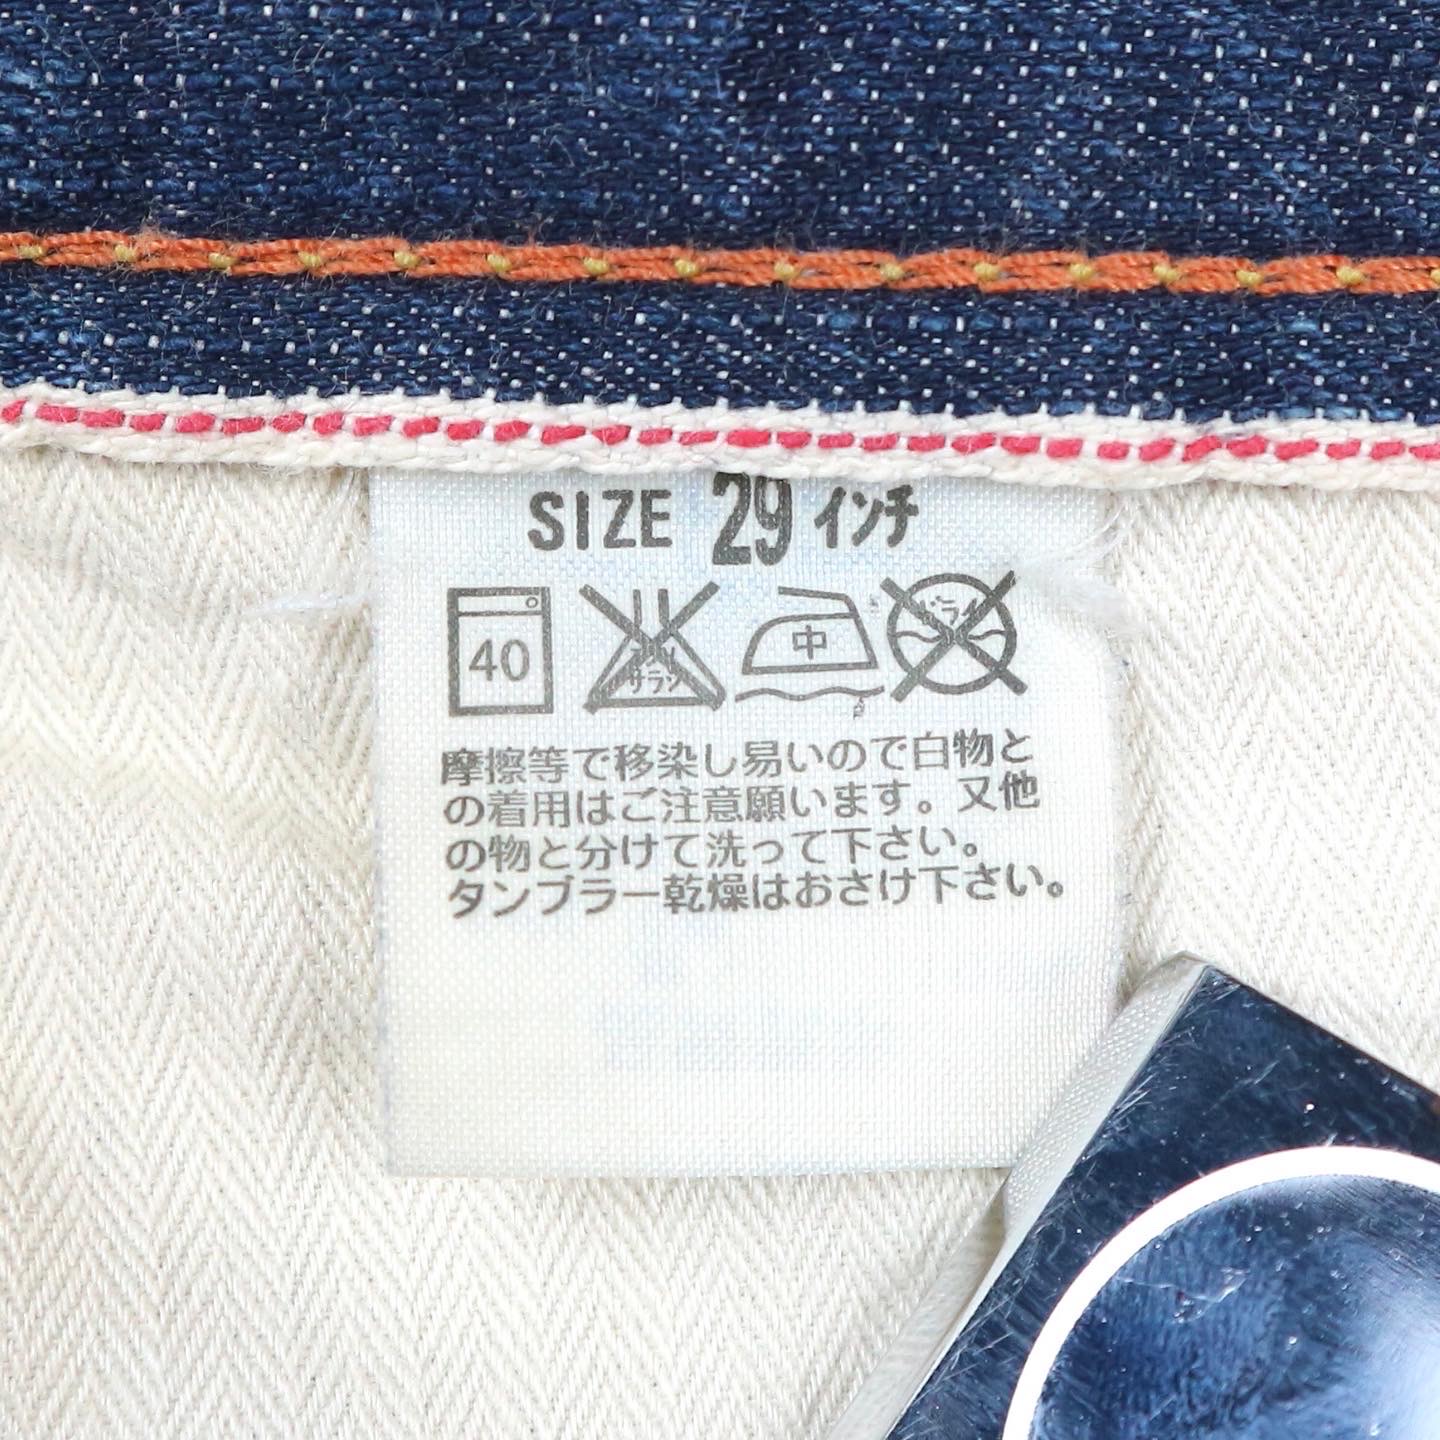 Levi’s Premium Selvedge Denim Jeans Size 29